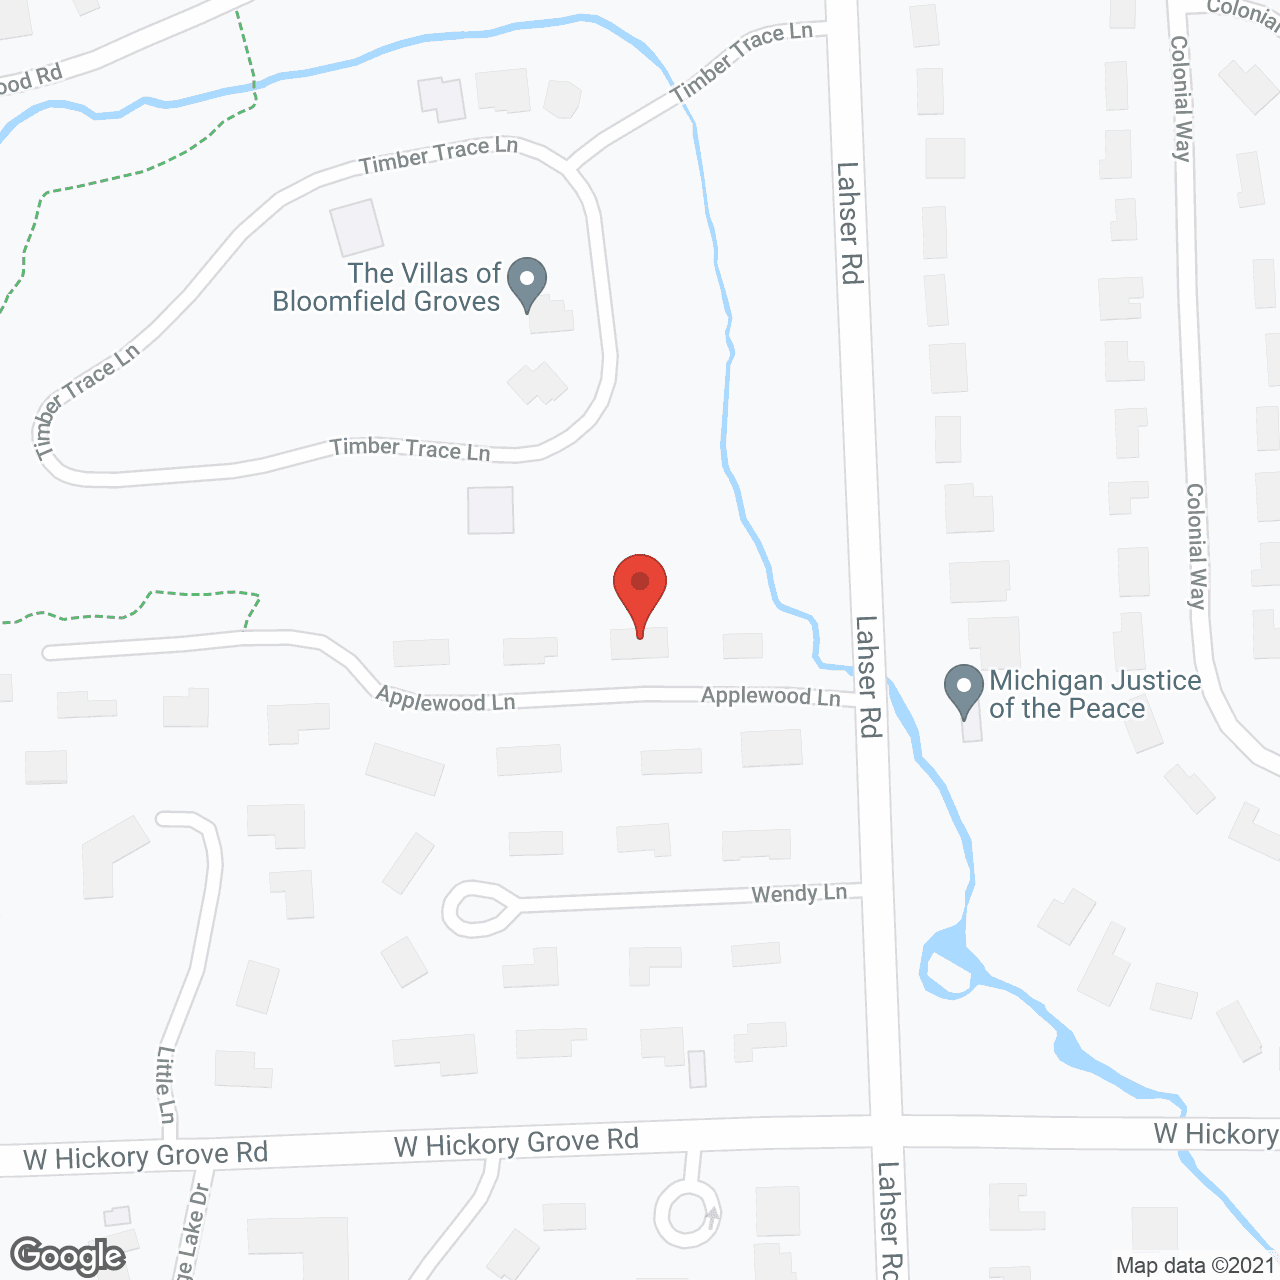 Applewood Lane Place in google map